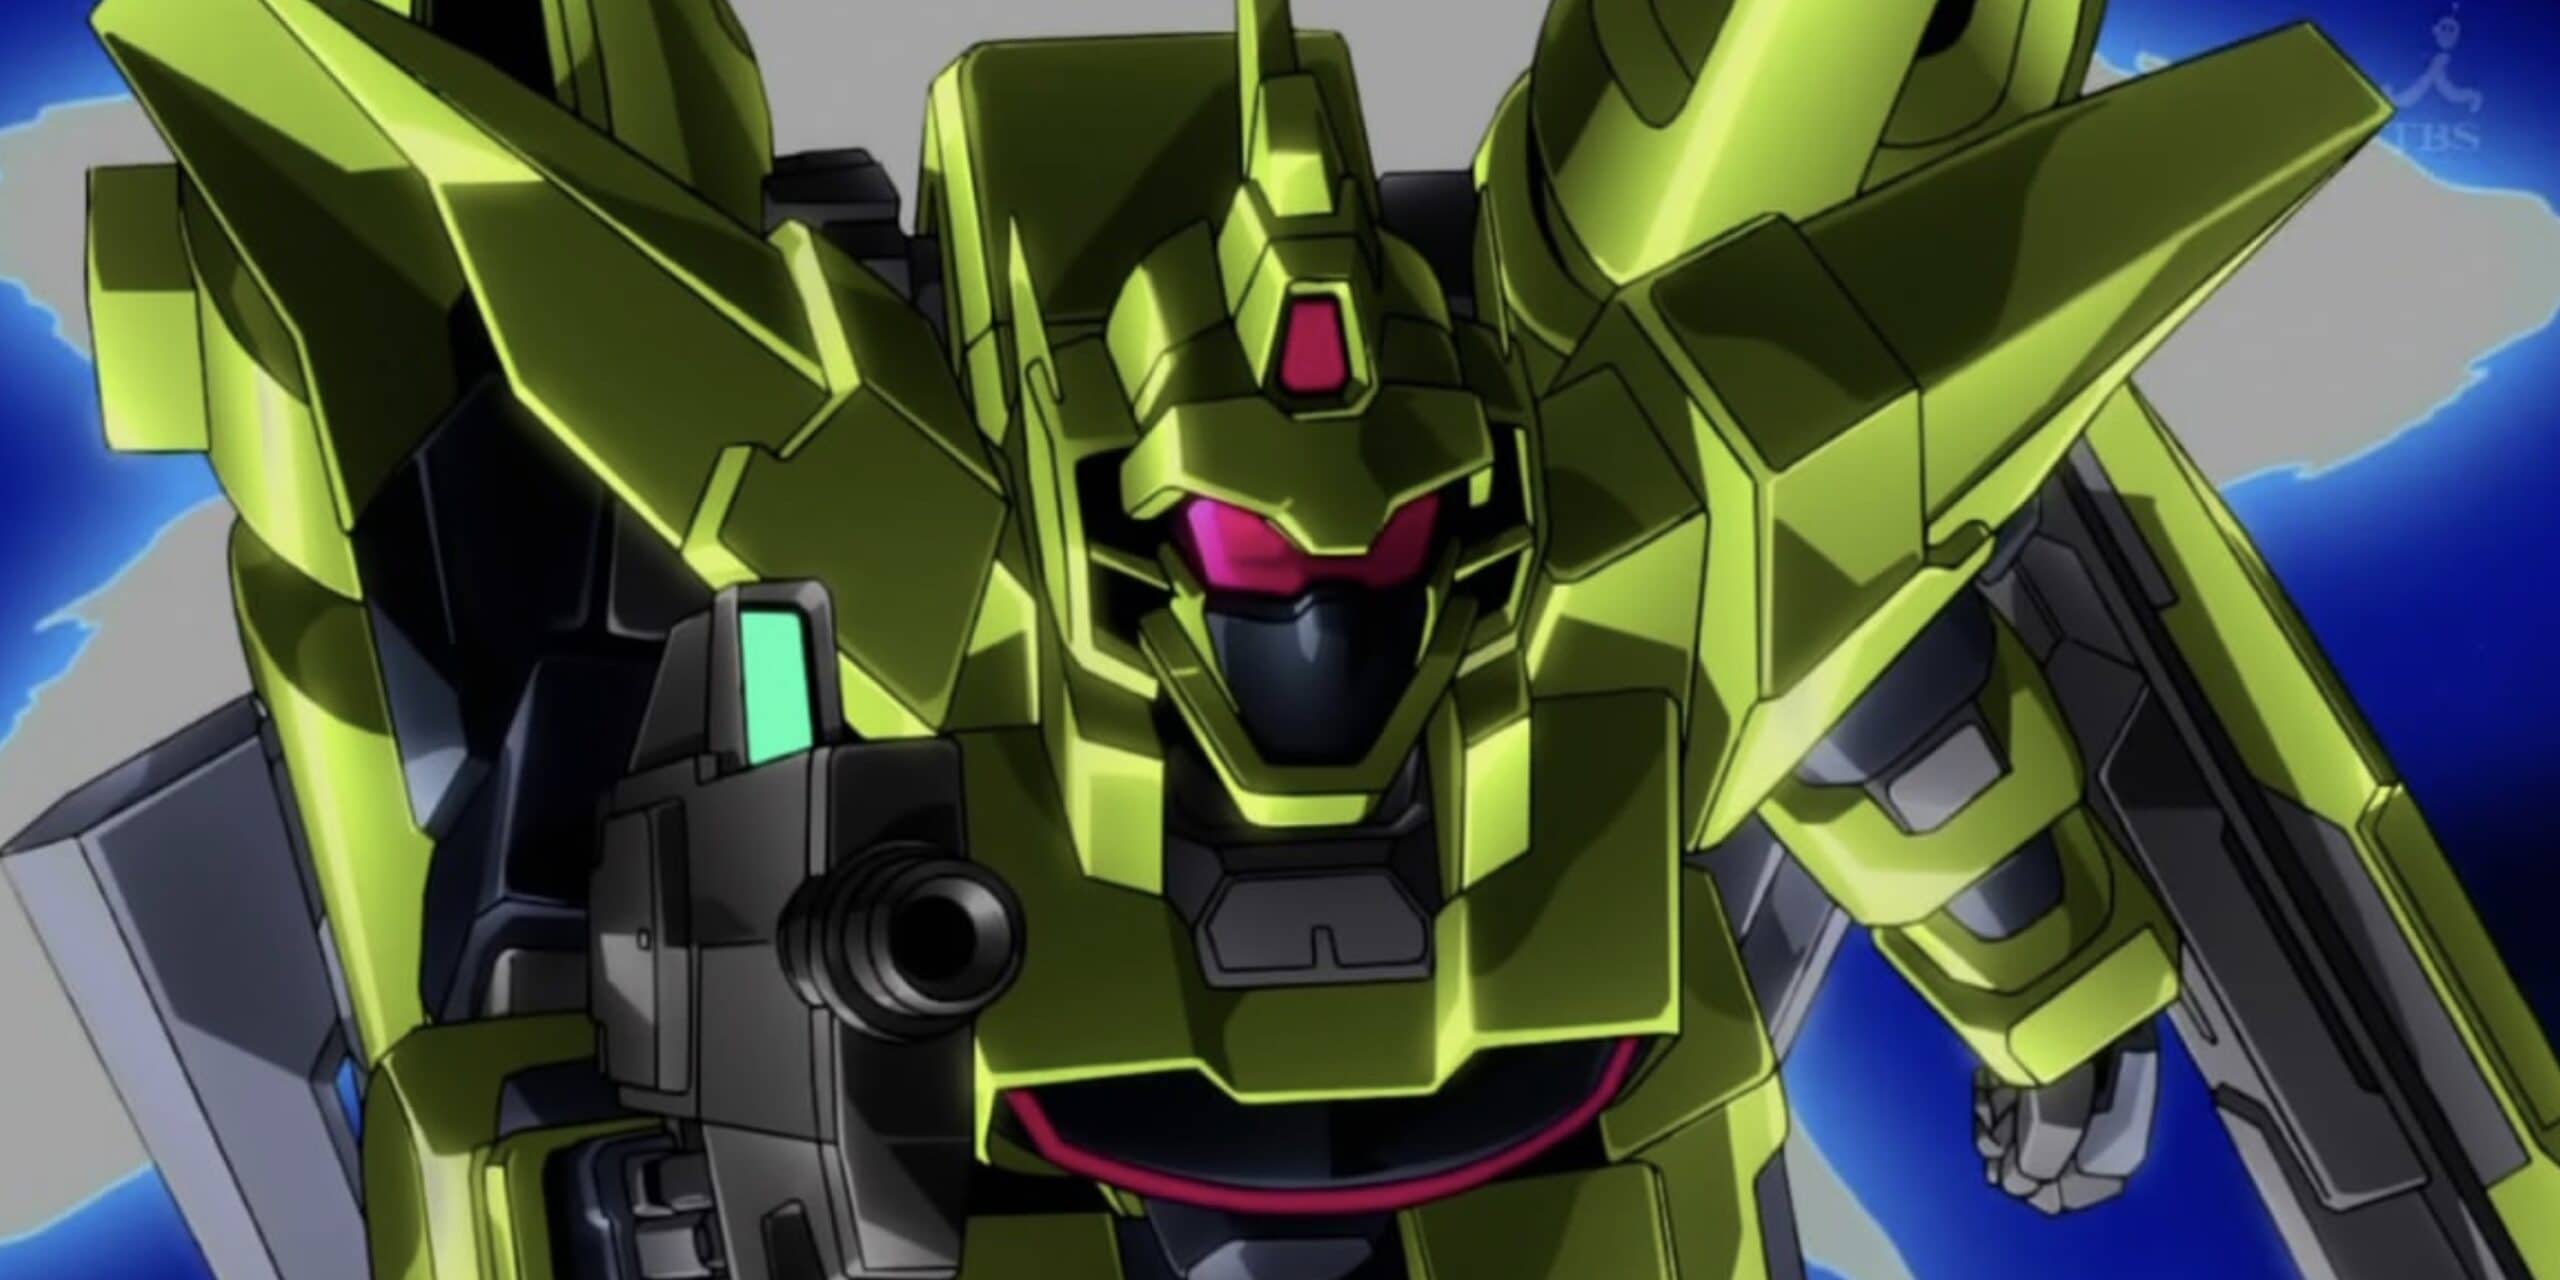 Anime’s Hype Will Decline Soon, According To The Creator Of Gundam